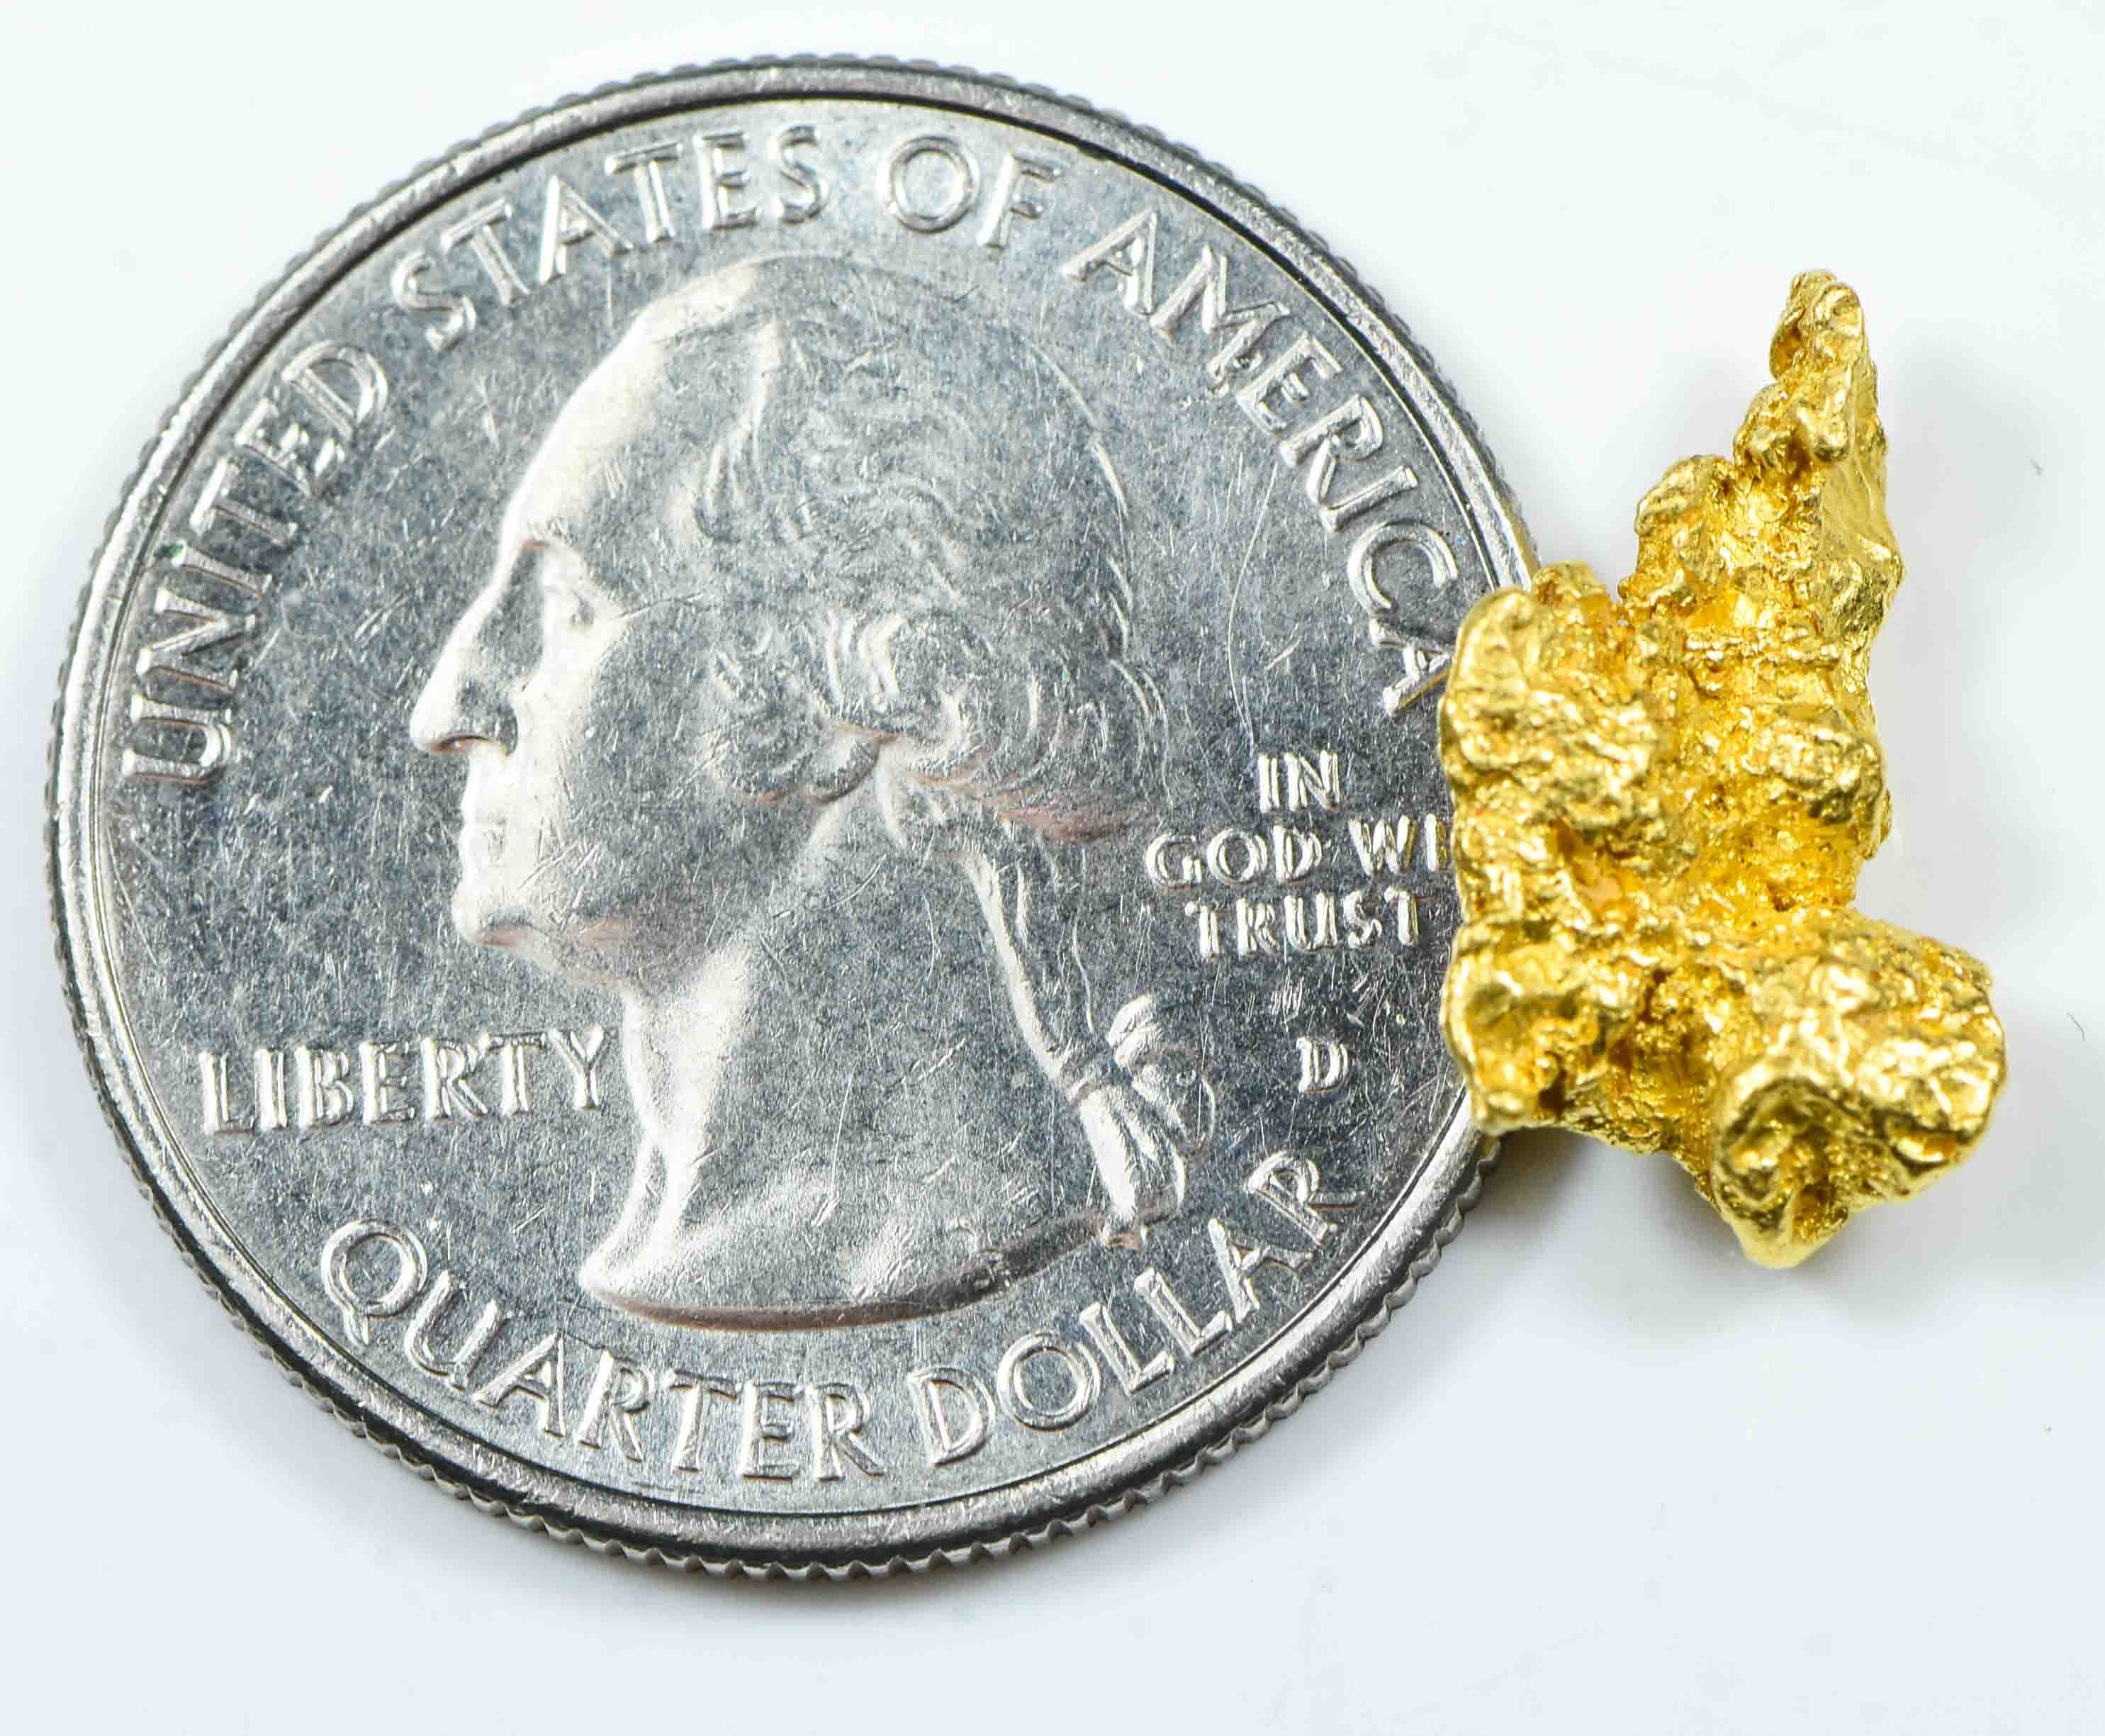 #907 Natural Gold Nugget Australian 2.94 Grams Genuine